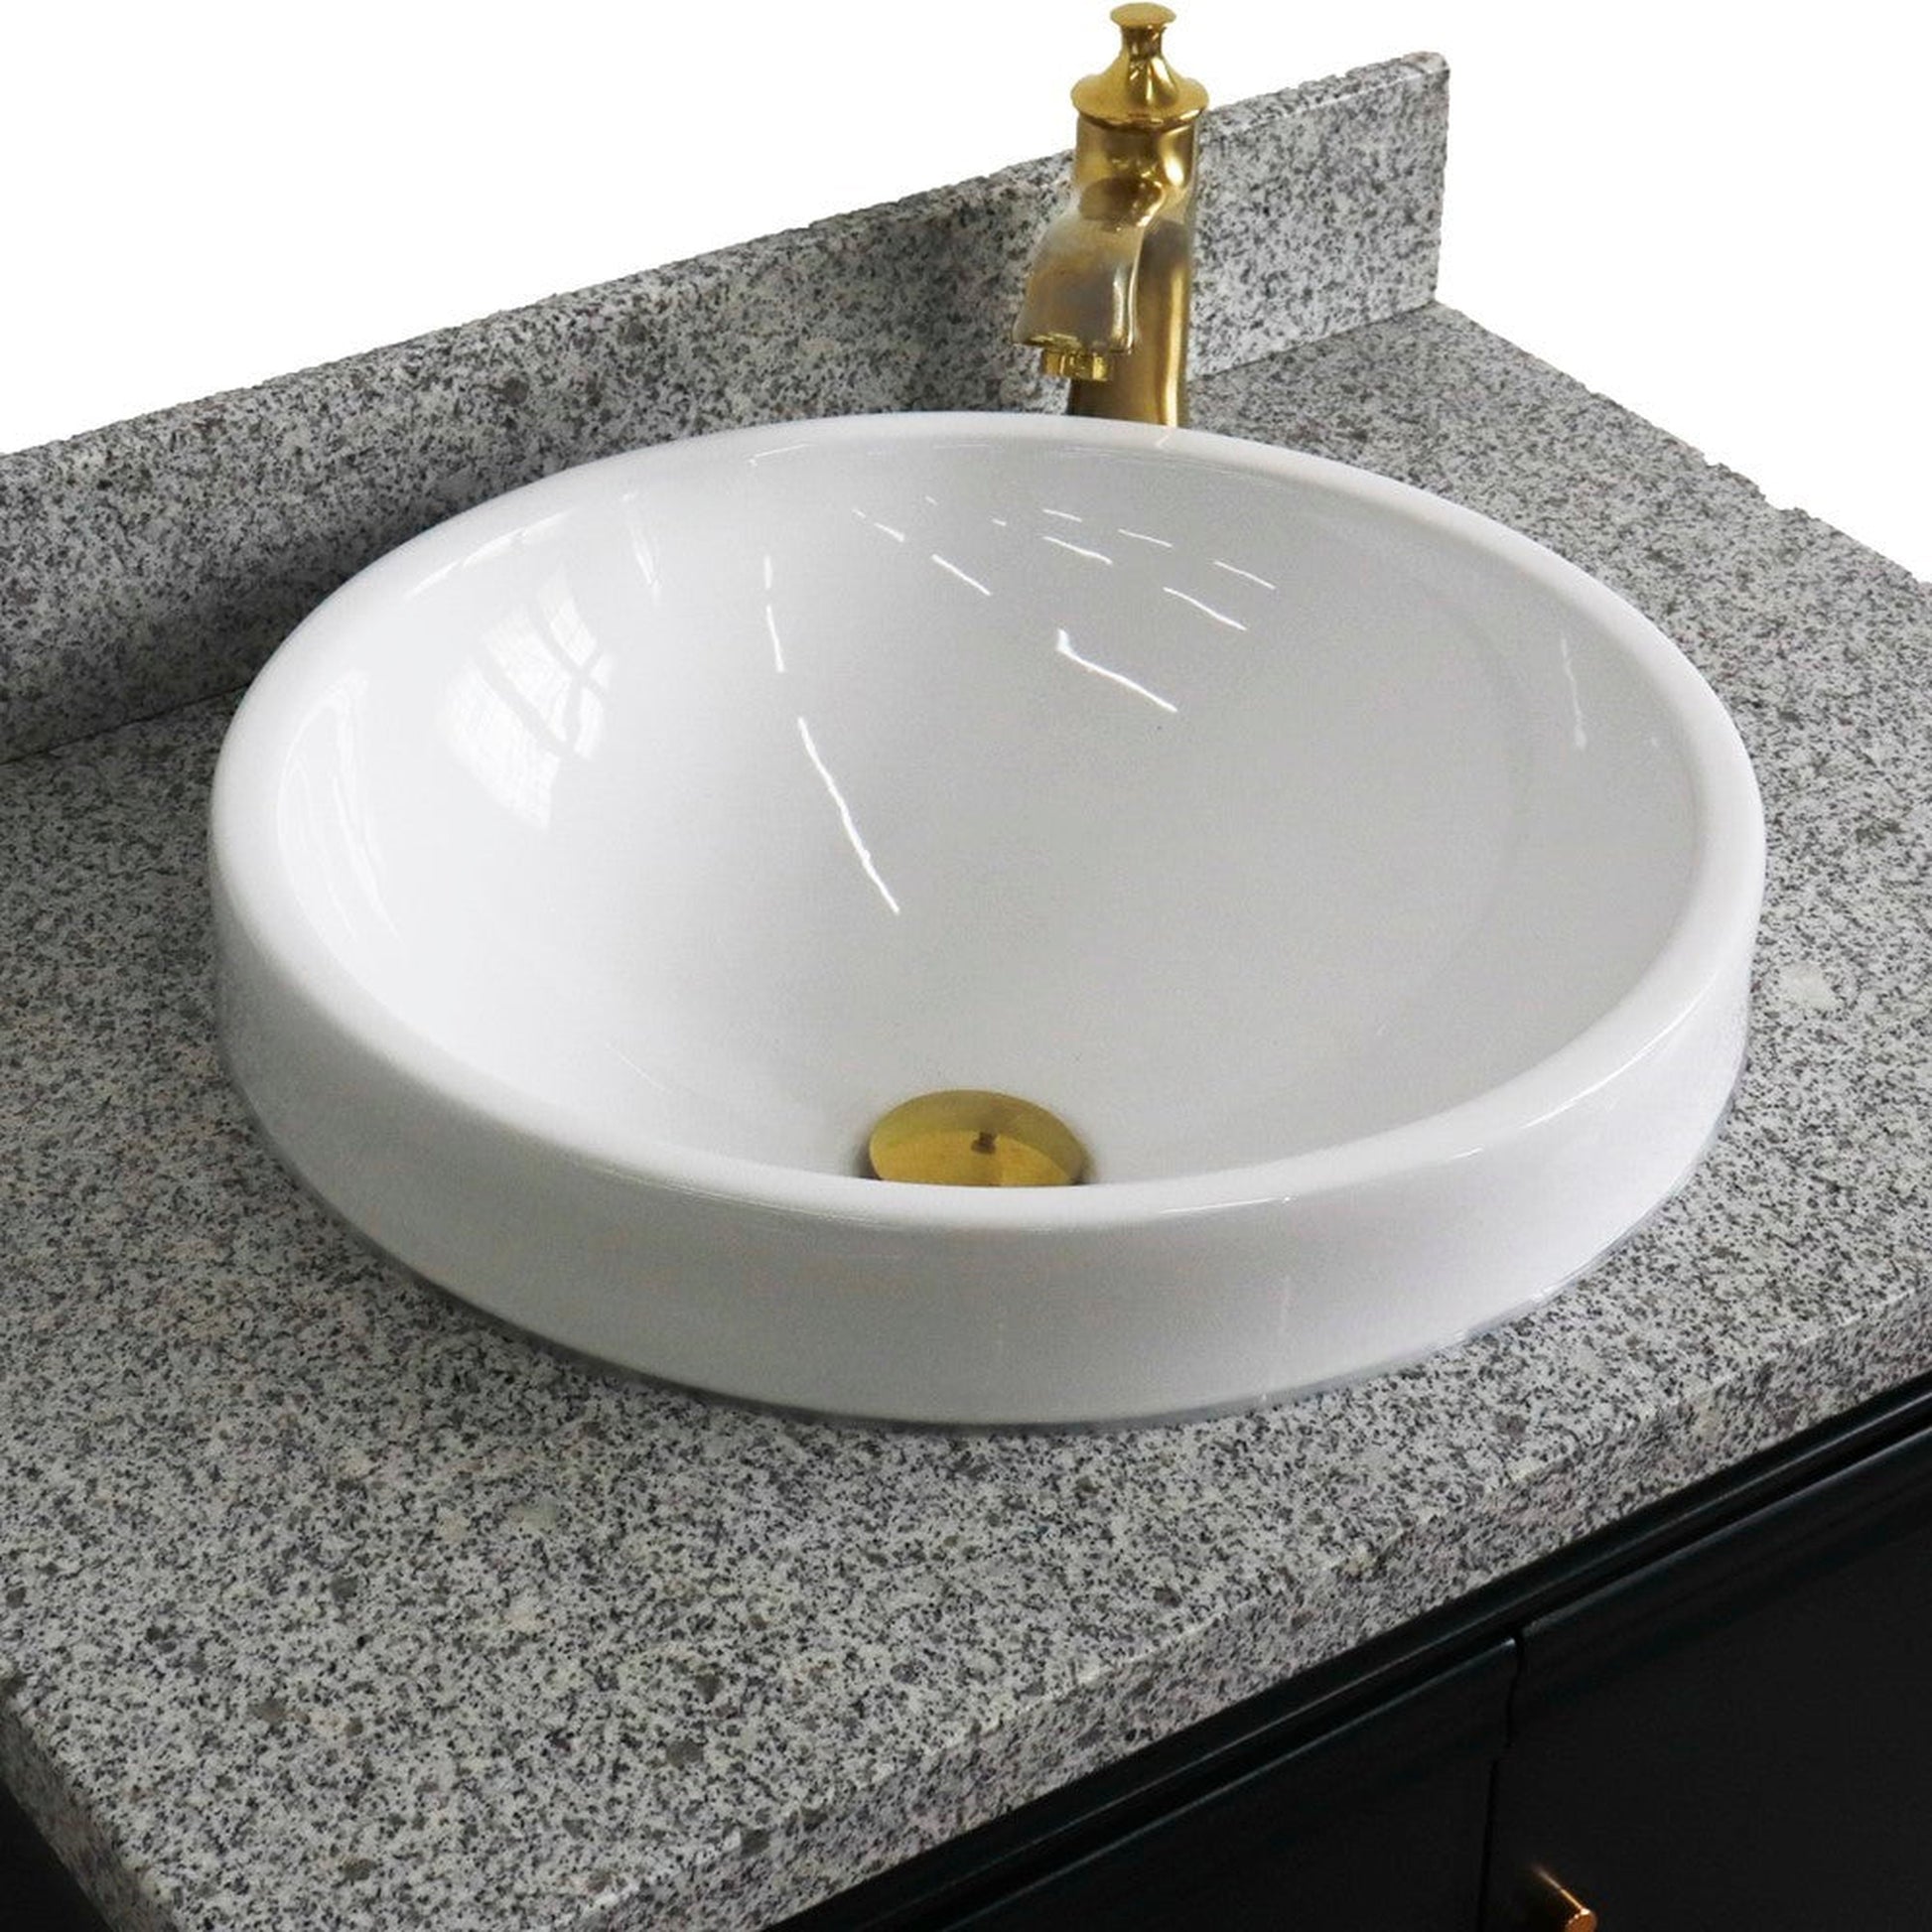 Bellaterra Home Forli 31" 2-Door 1-Drawer Dark Gray Freestanding Vanity Set With Ceramic Vessel Sink And Gray Granite Top